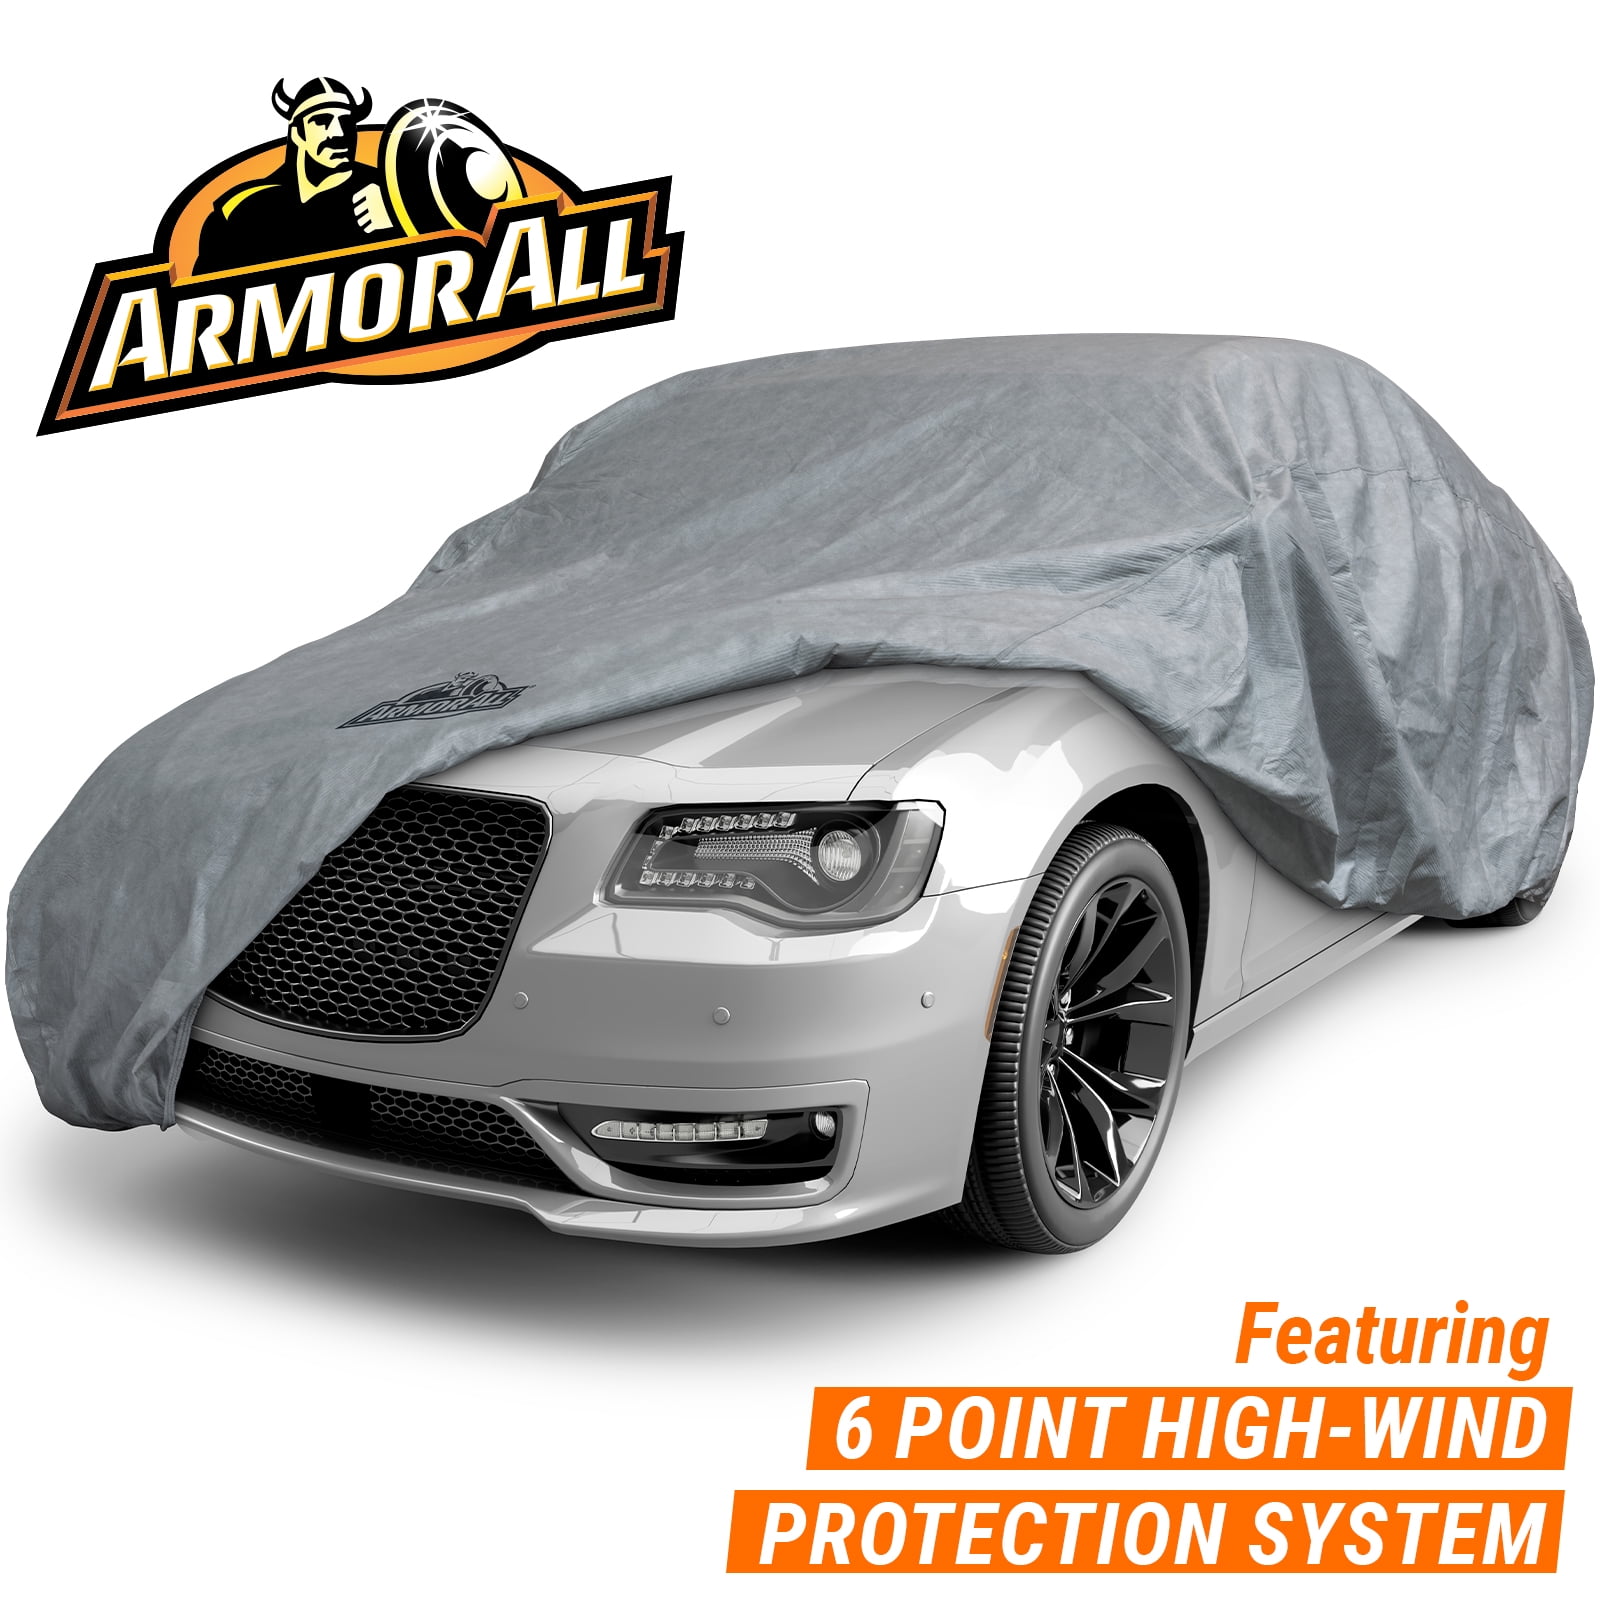 Armor All Heavy Duty Premium Car Cover, Sedan Size 4